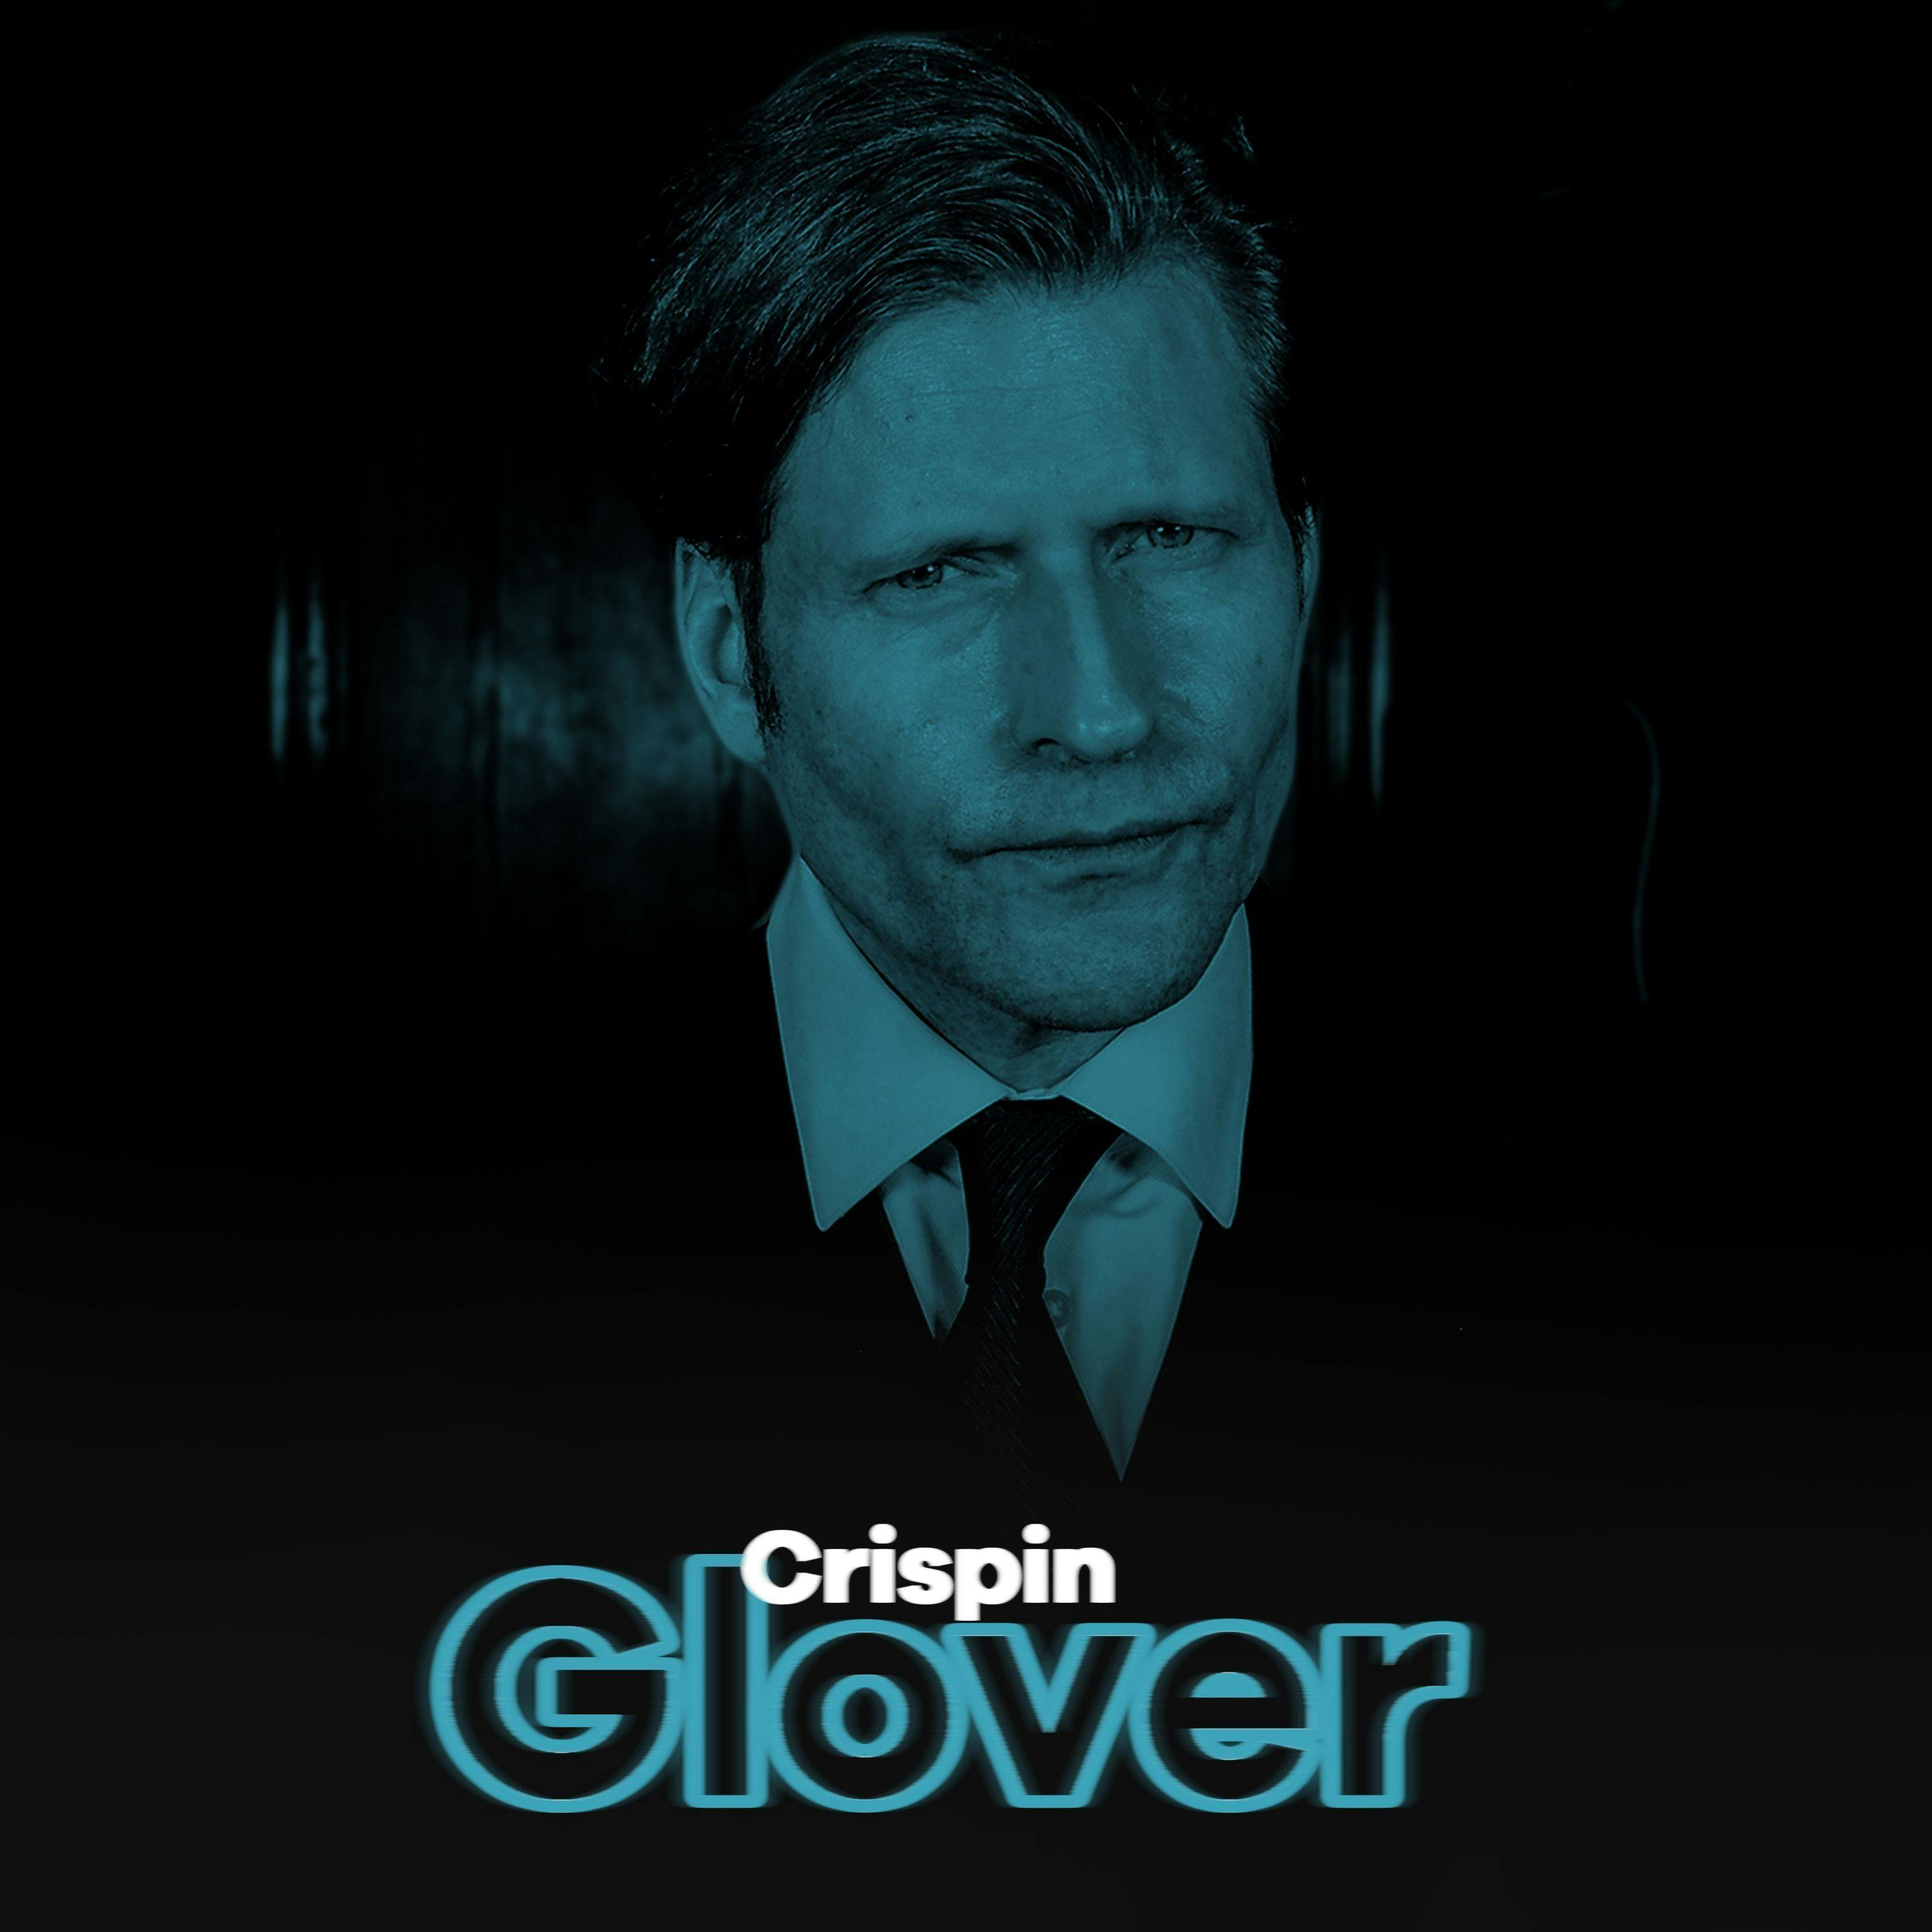 Crispin Glover